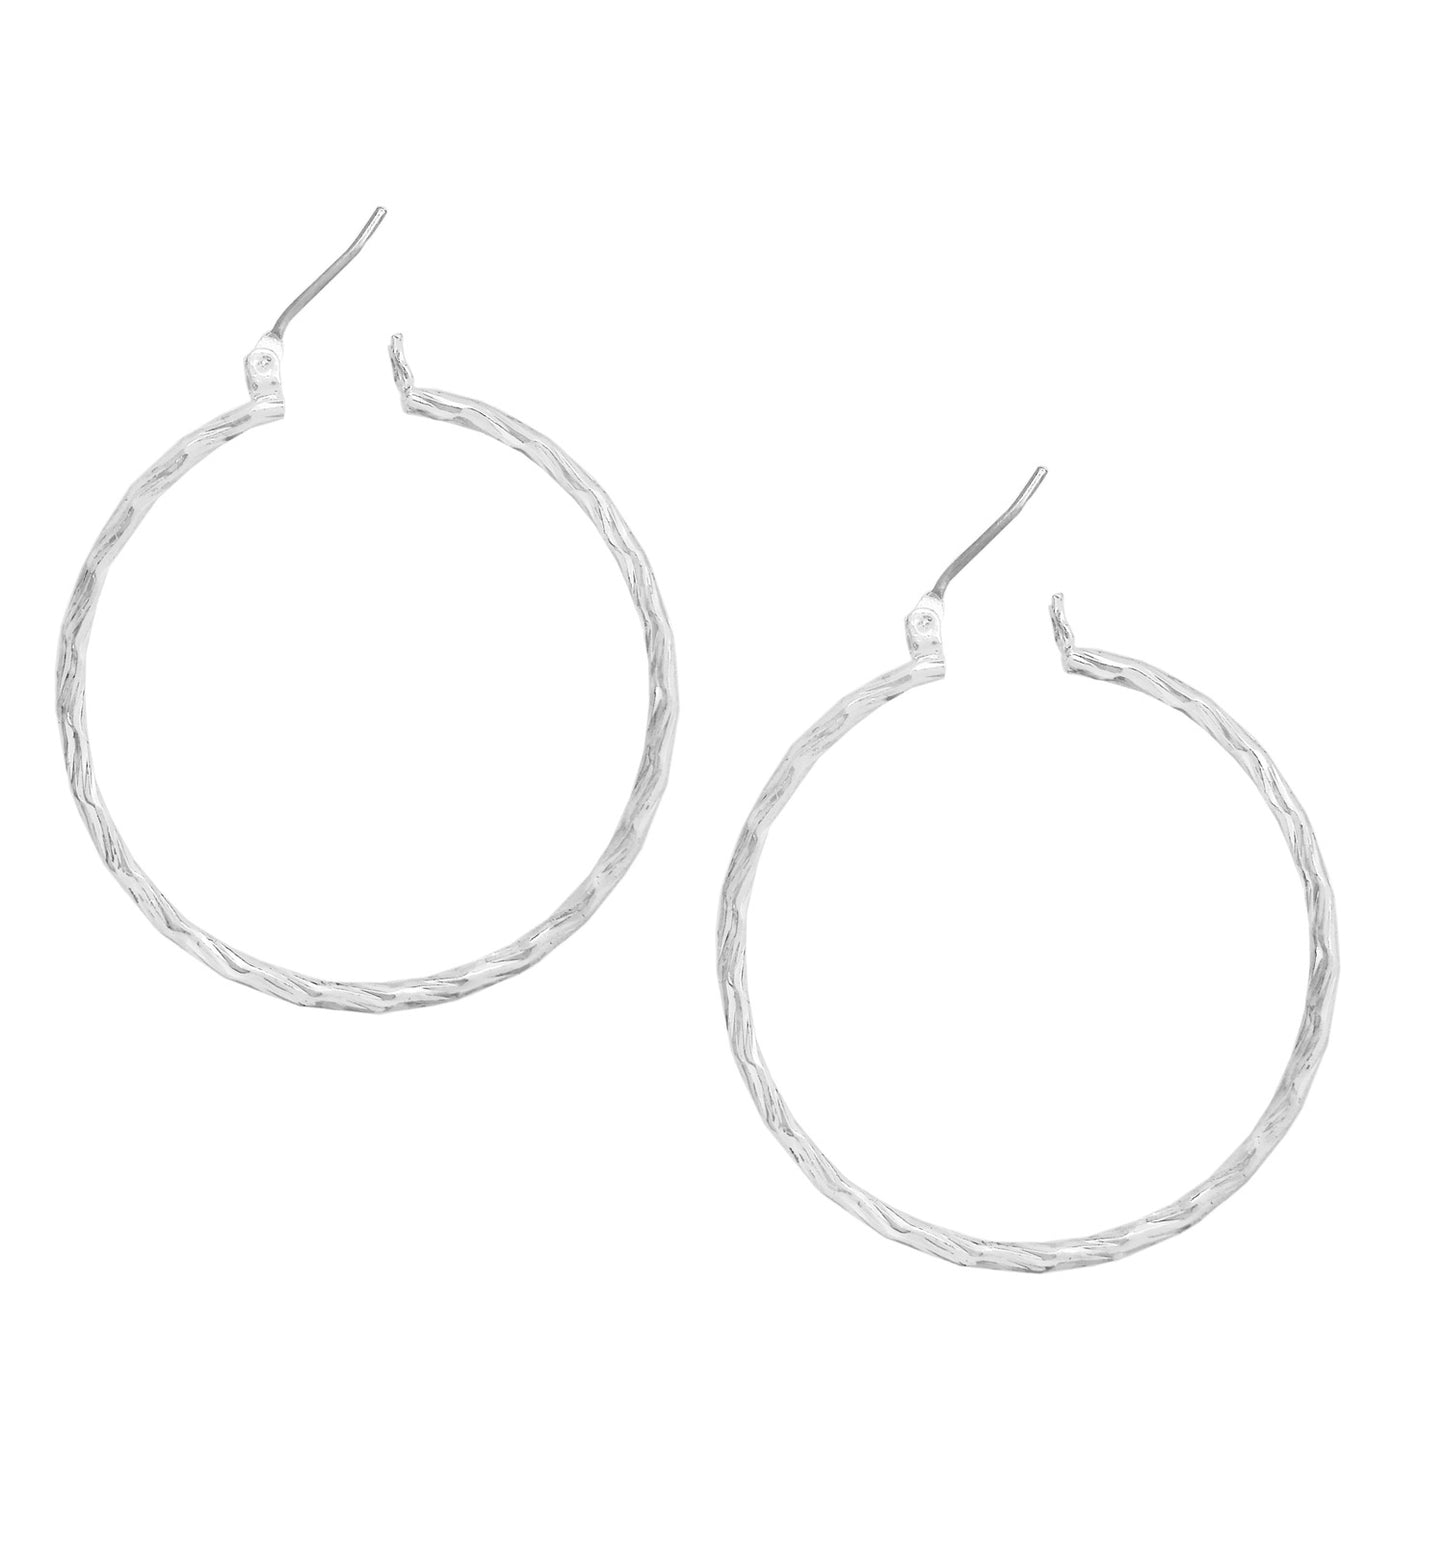 Silver Tone Textured Hoop Round Pierced Earrings 1 3/8"